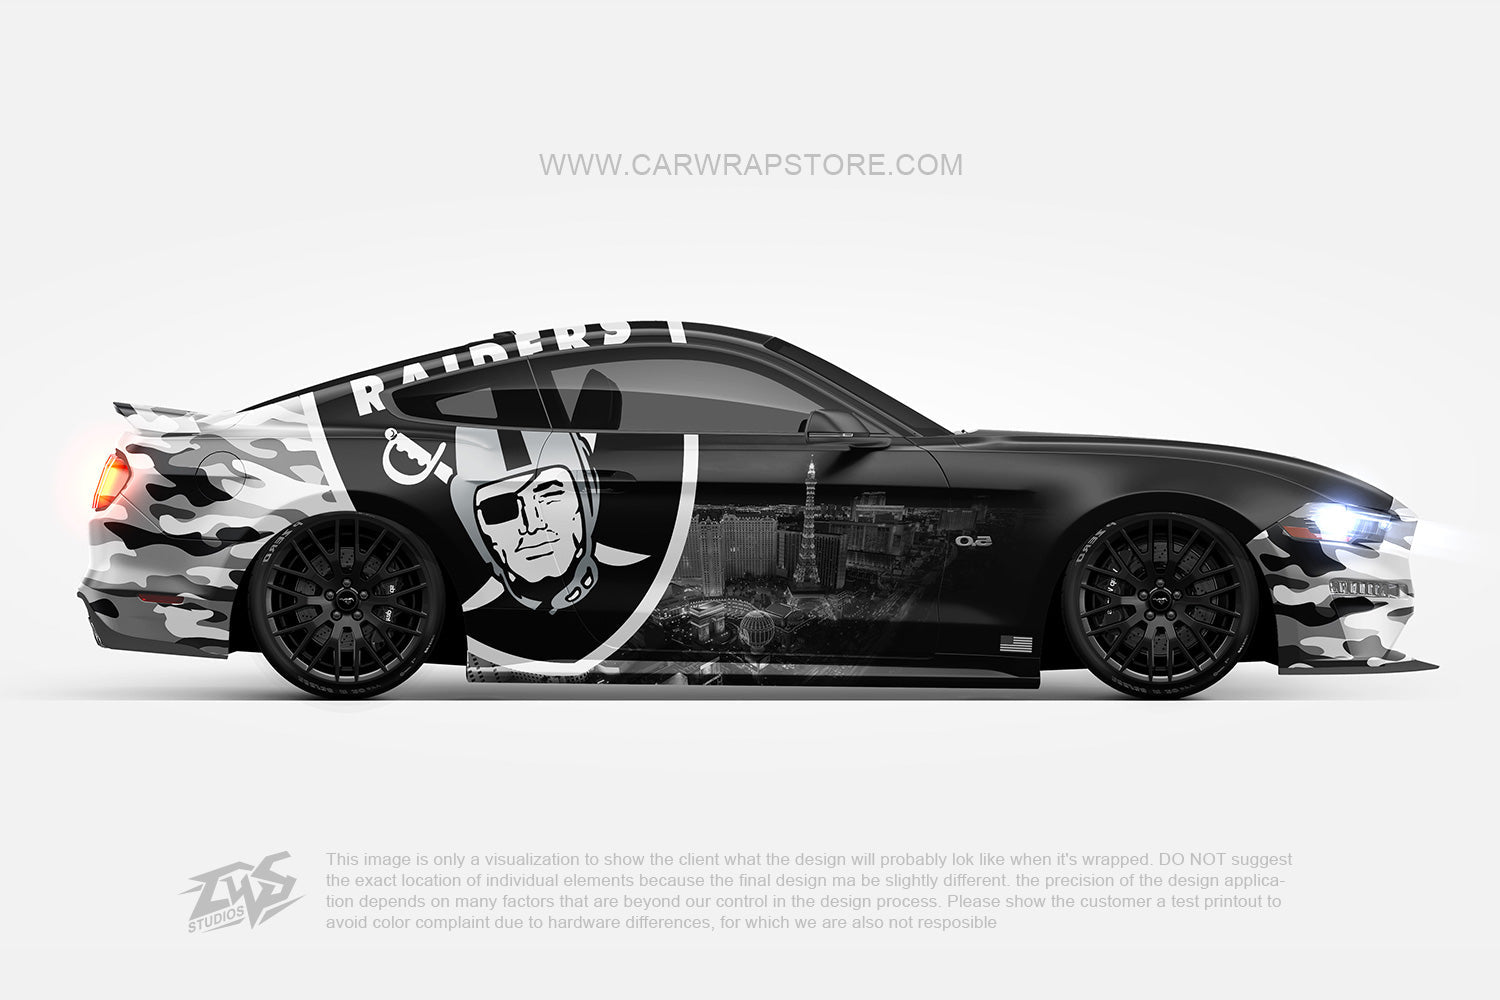 Las Vegas Raiders【NFL-07】 - Car Wrap Store